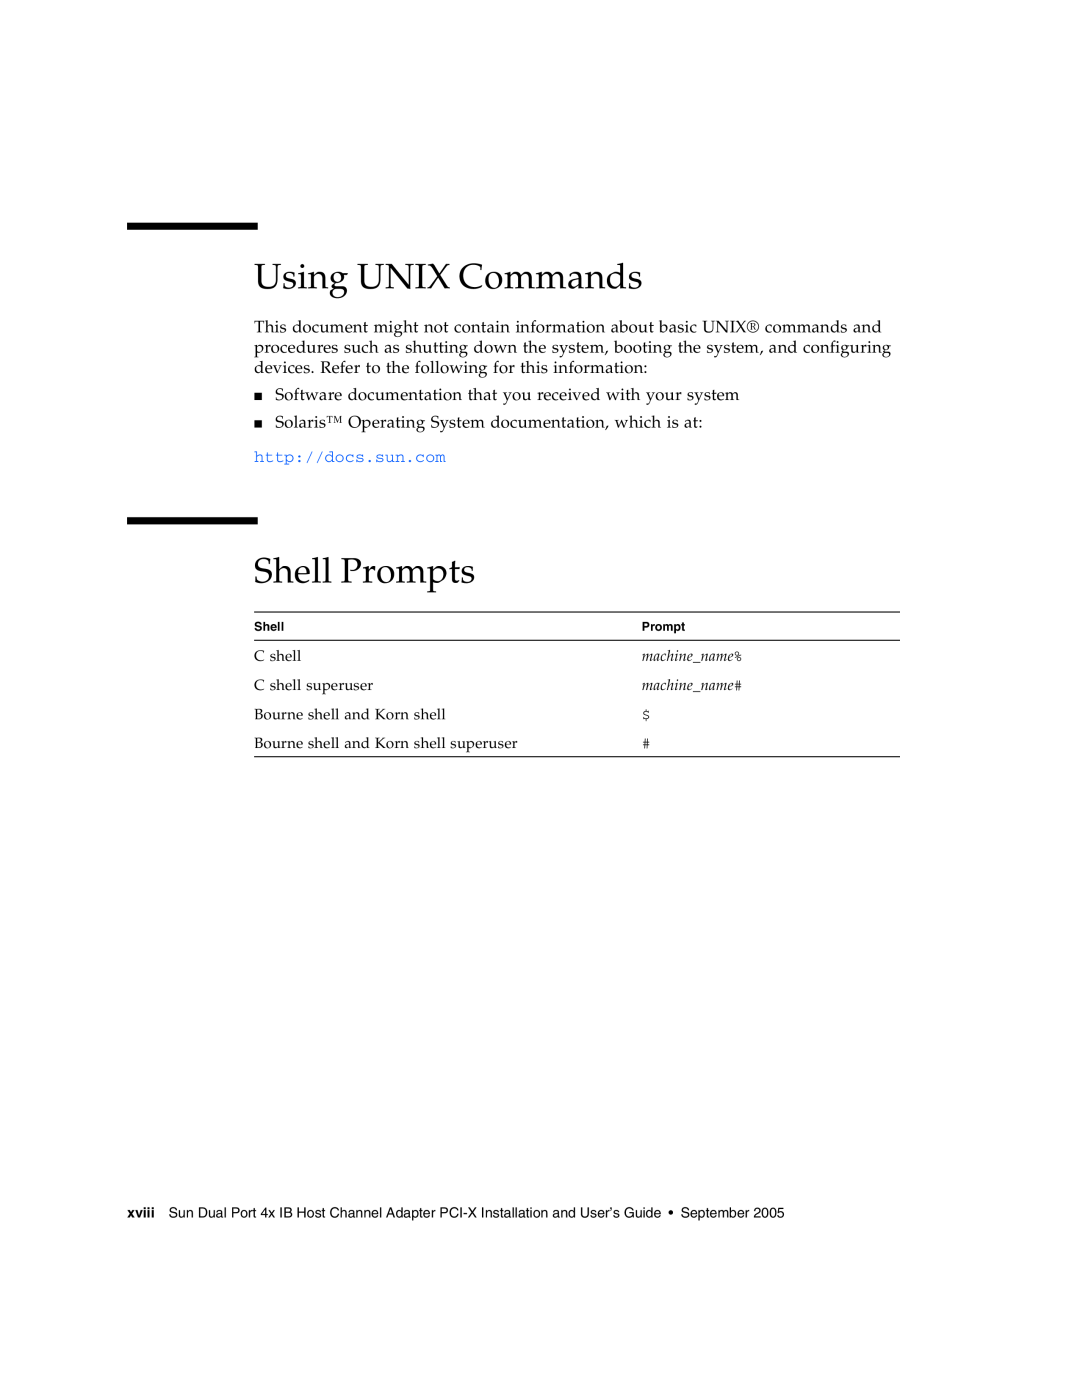 Sun Microsystems PCI manual Using UNIX Commands, Shell Prompts, http//docs.sun.com 